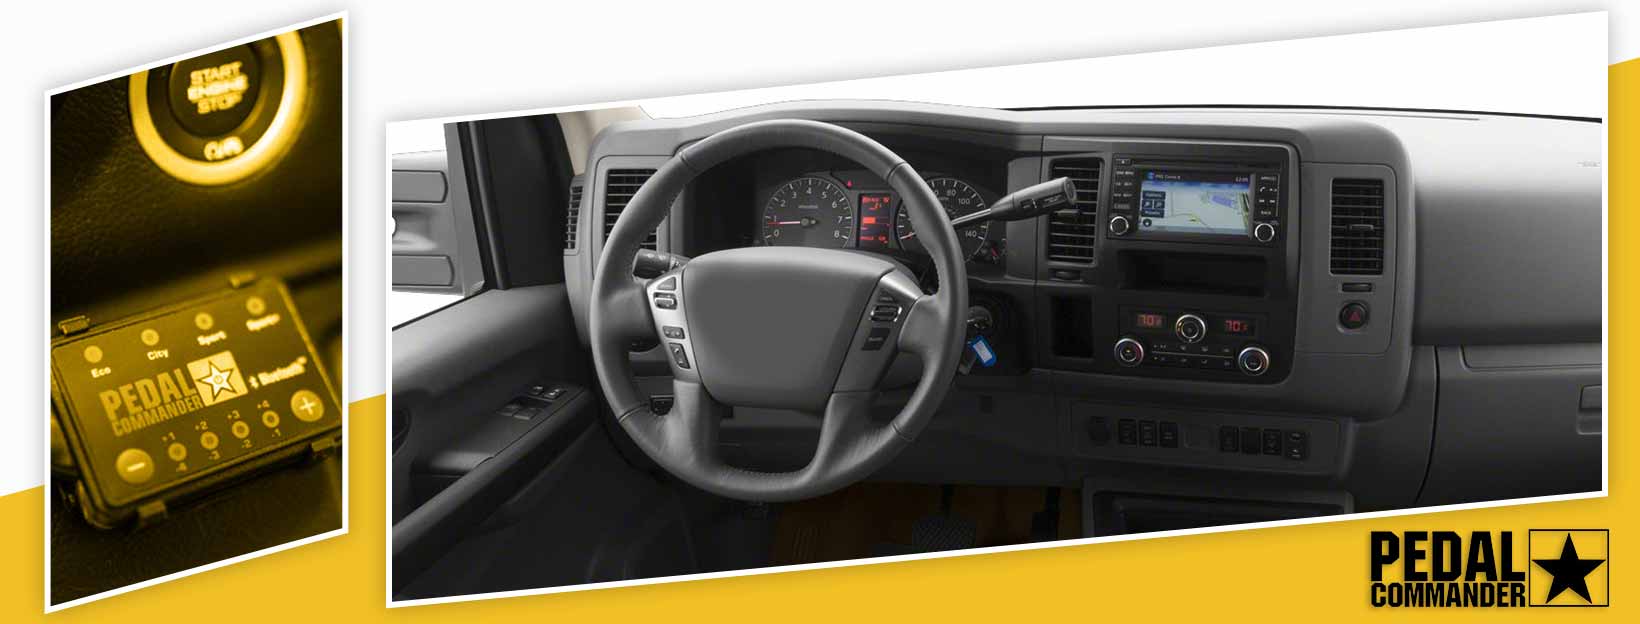 Pedal Commander for Nissan NV3500 - interior